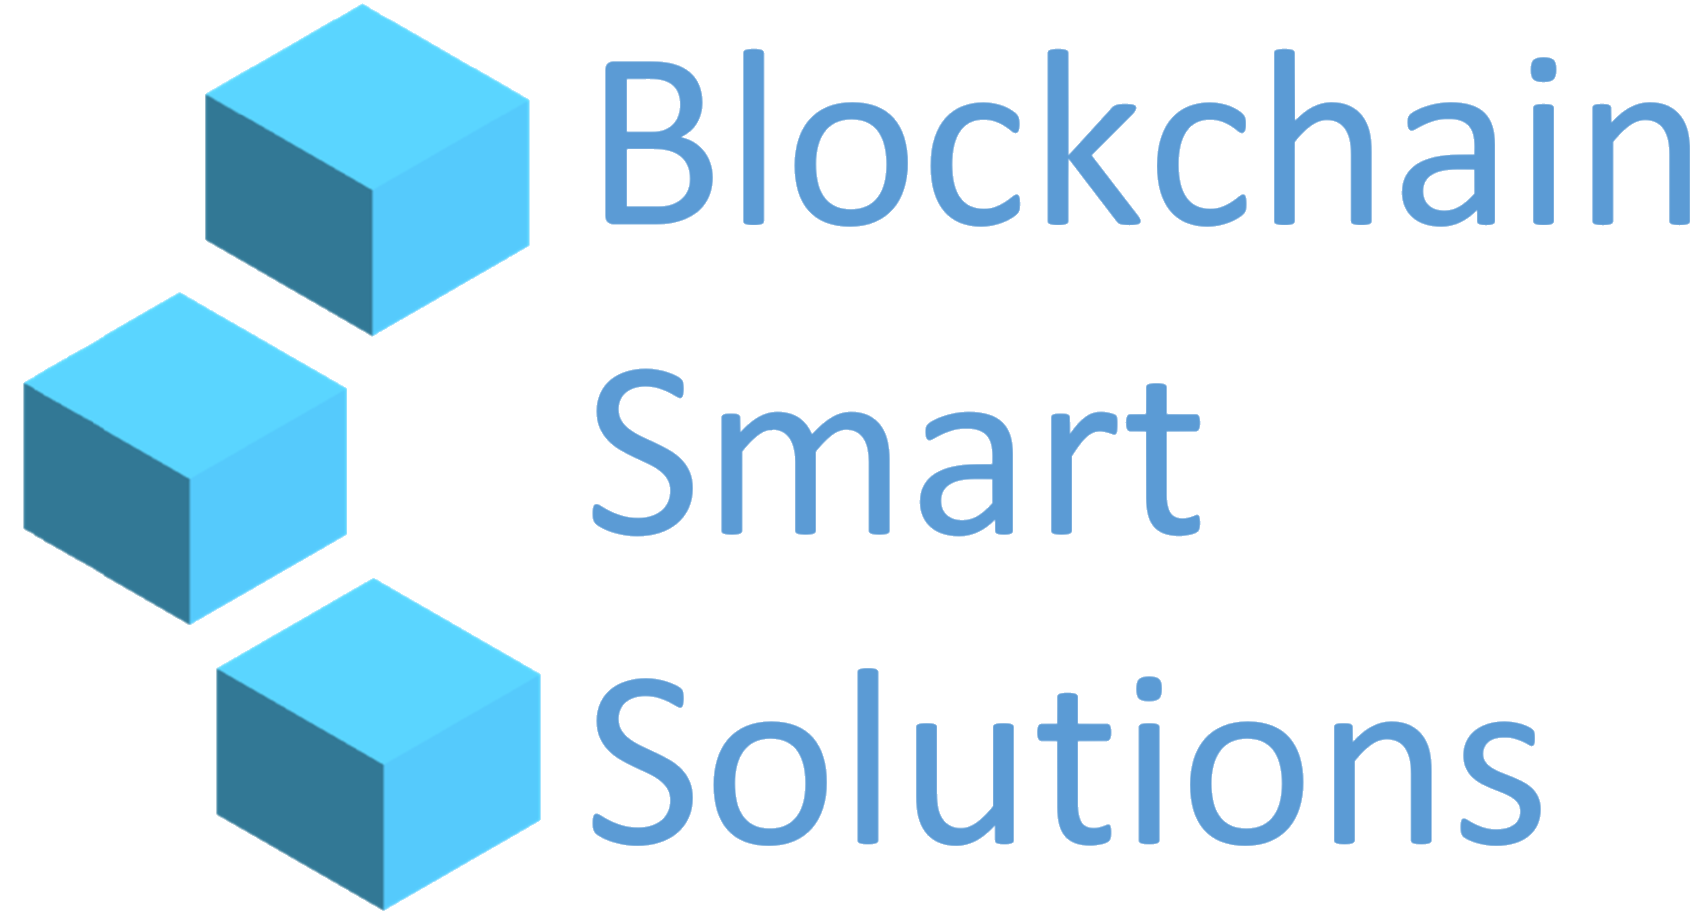 Blockchain Smart Solutions logo